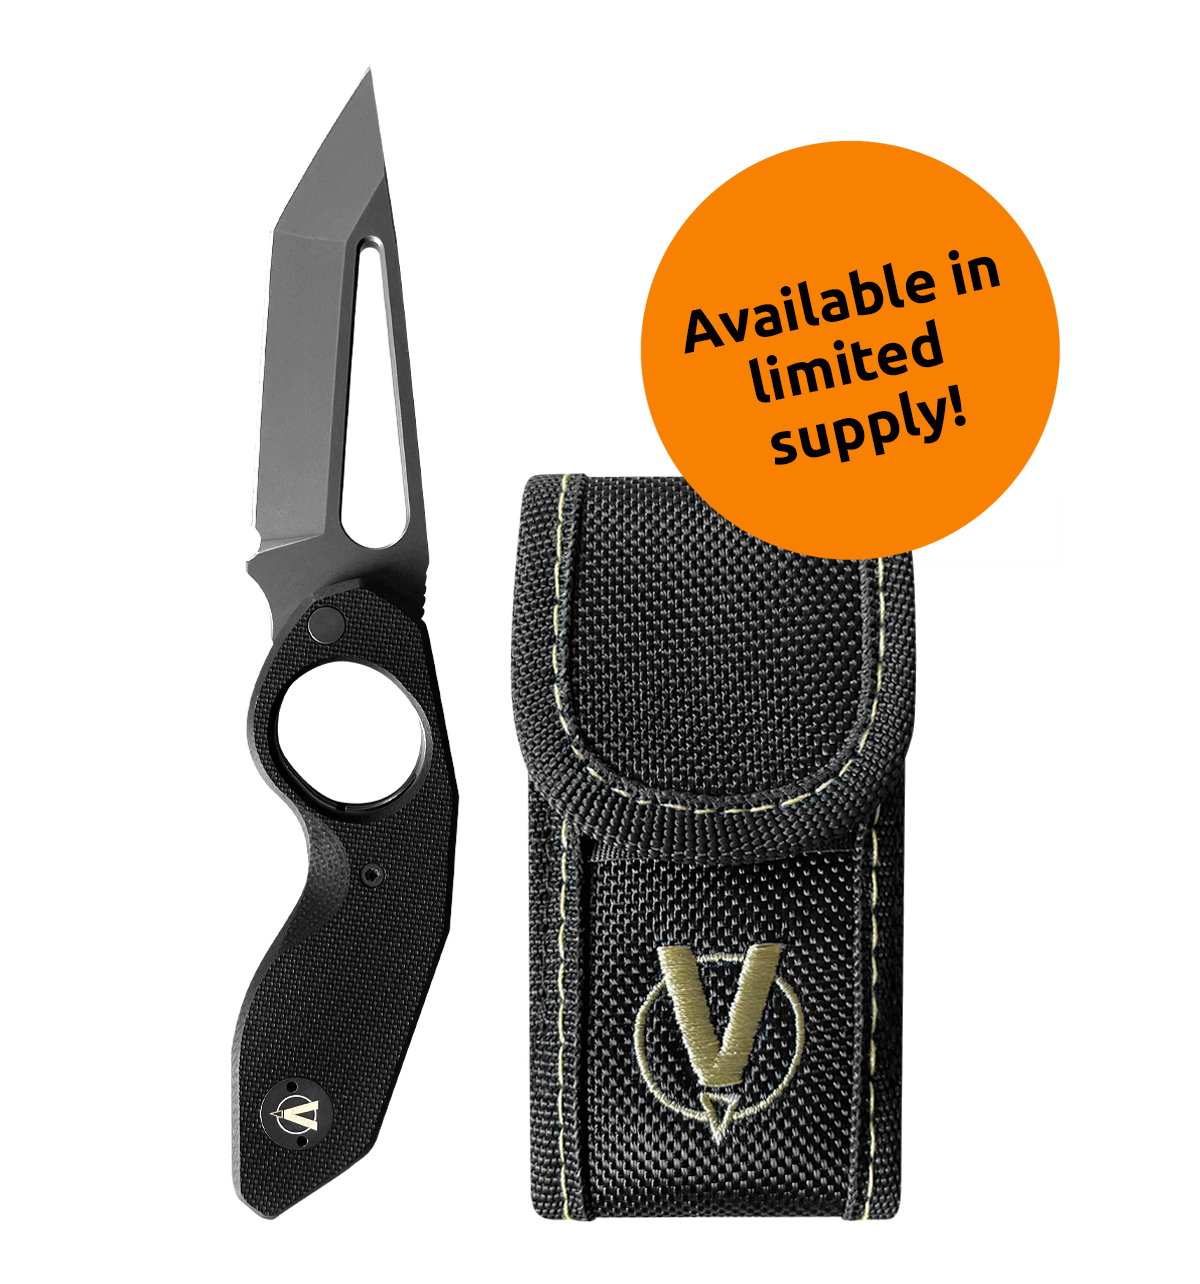 Original VulkanUS Hornet Pocket Knife with black grip and store bag